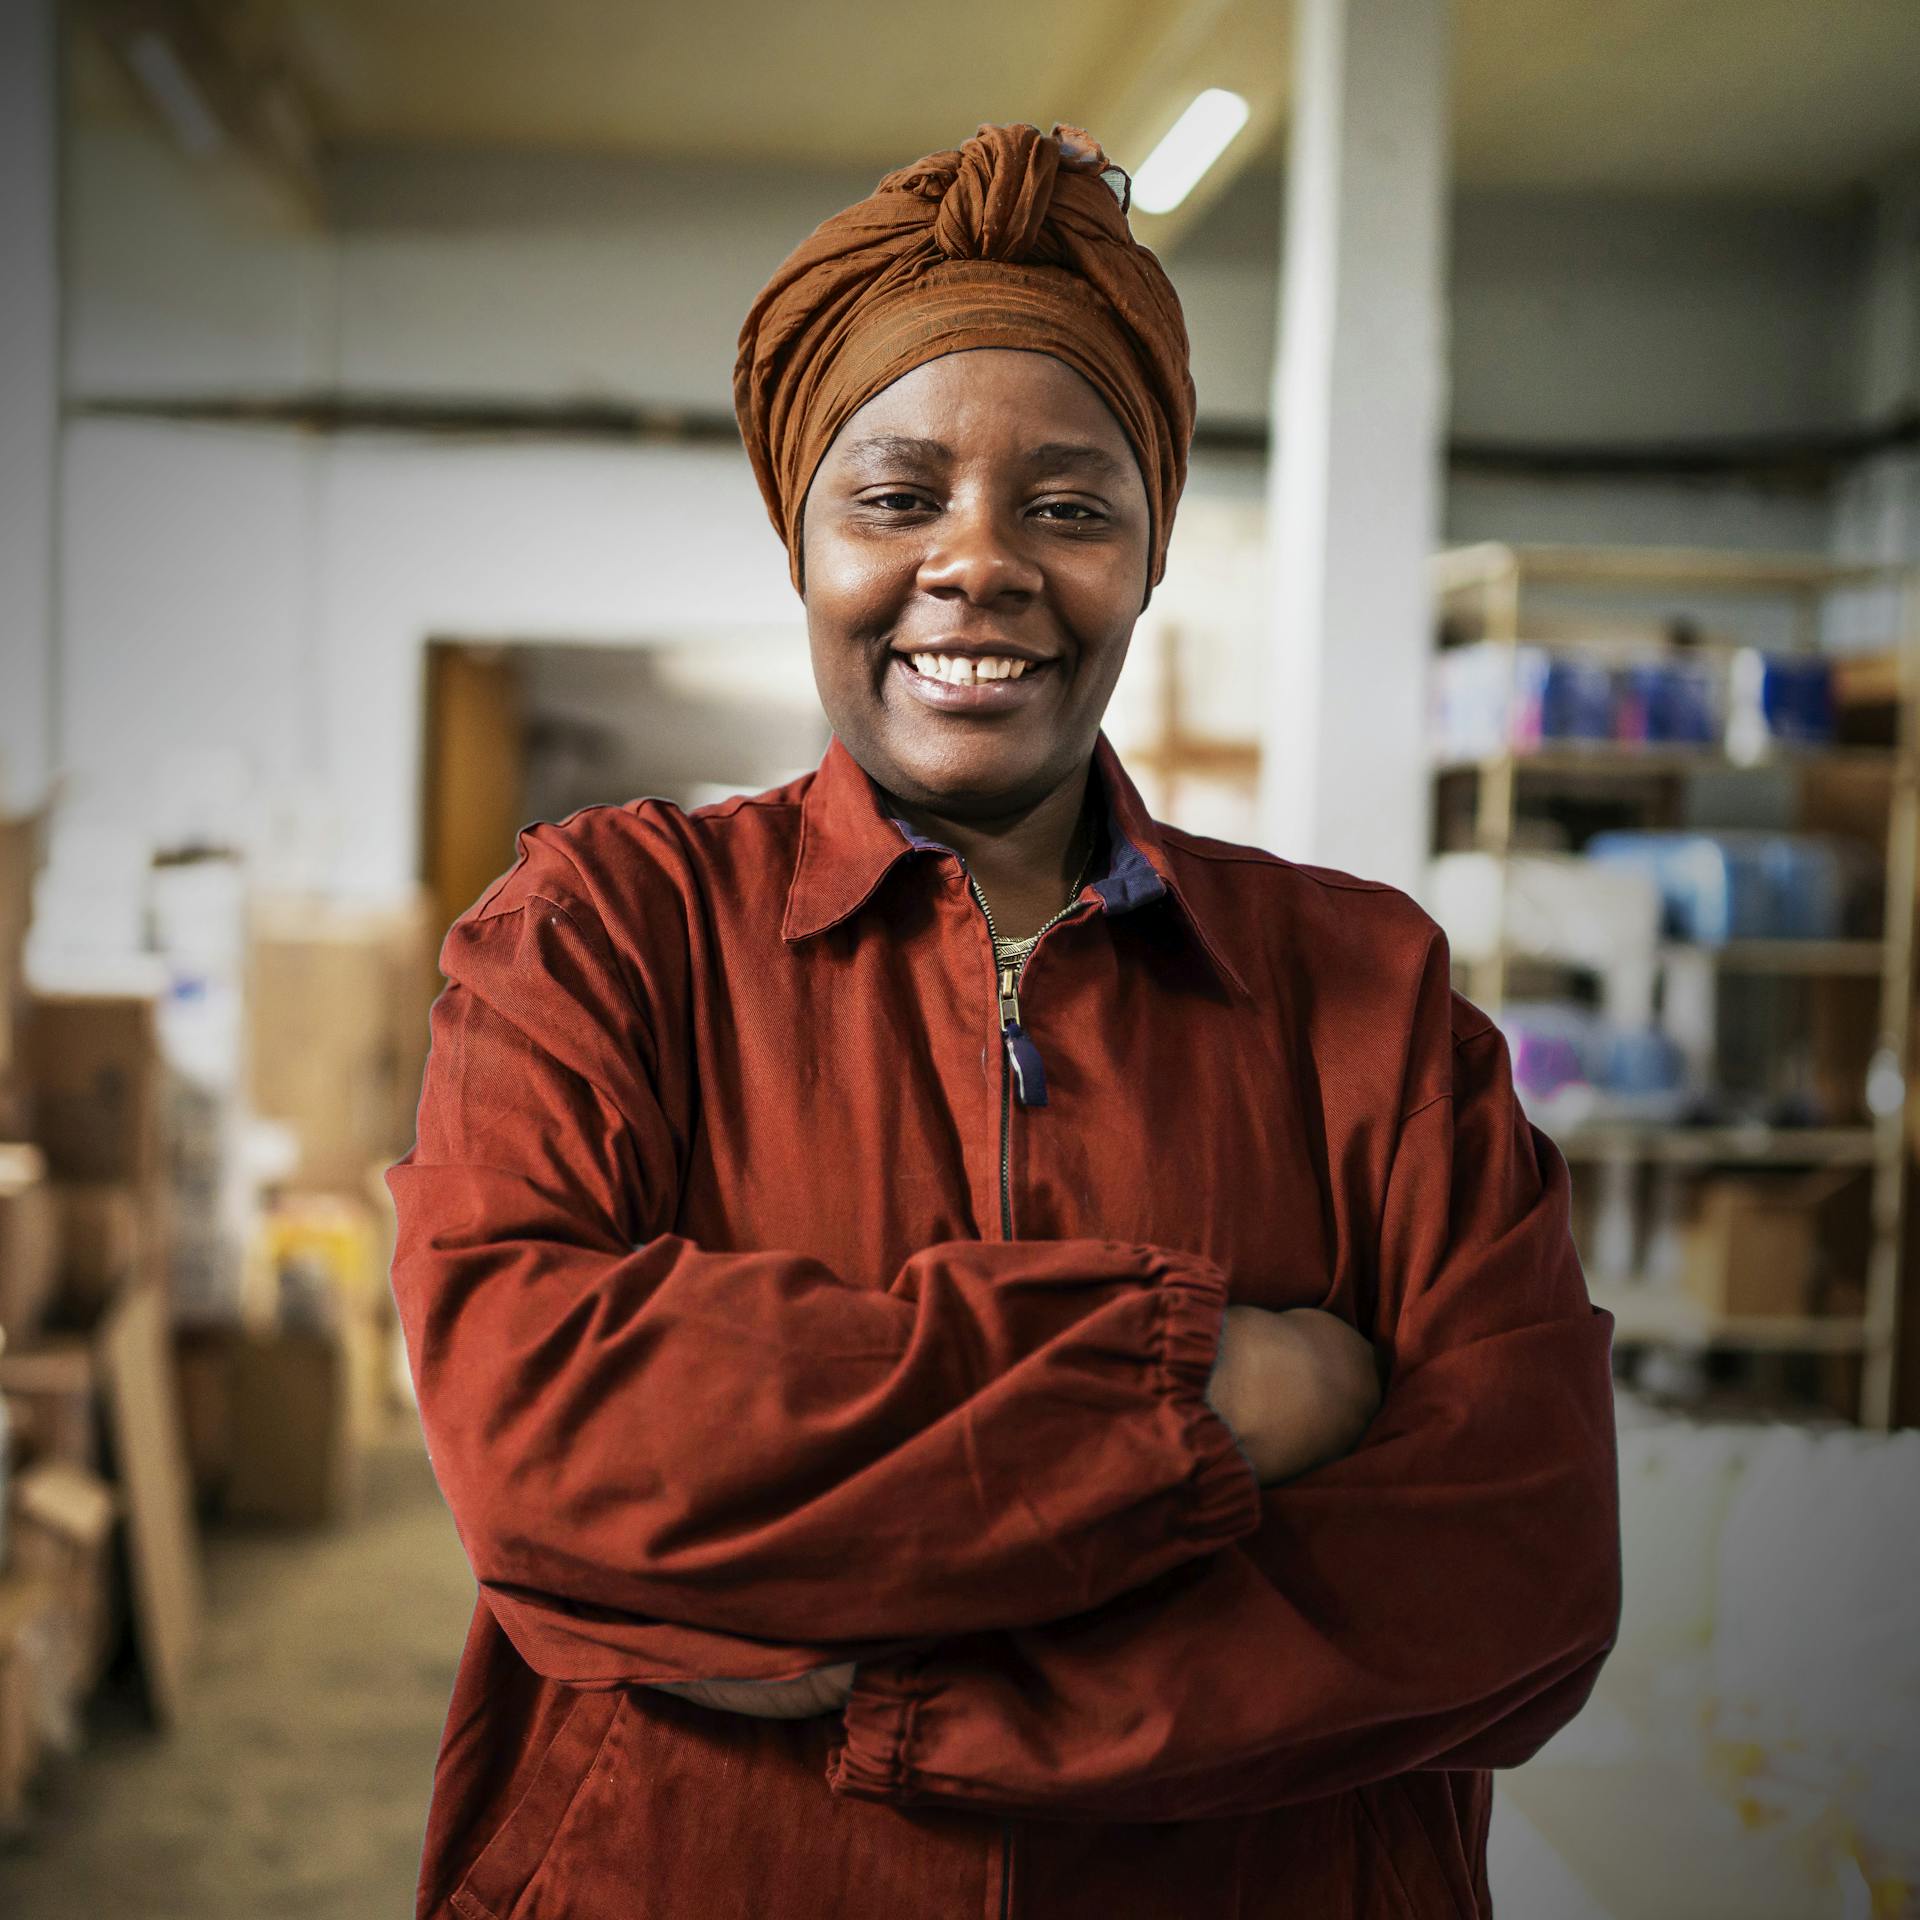 Orange Bond Pledge - Black Women working in Garment Industry